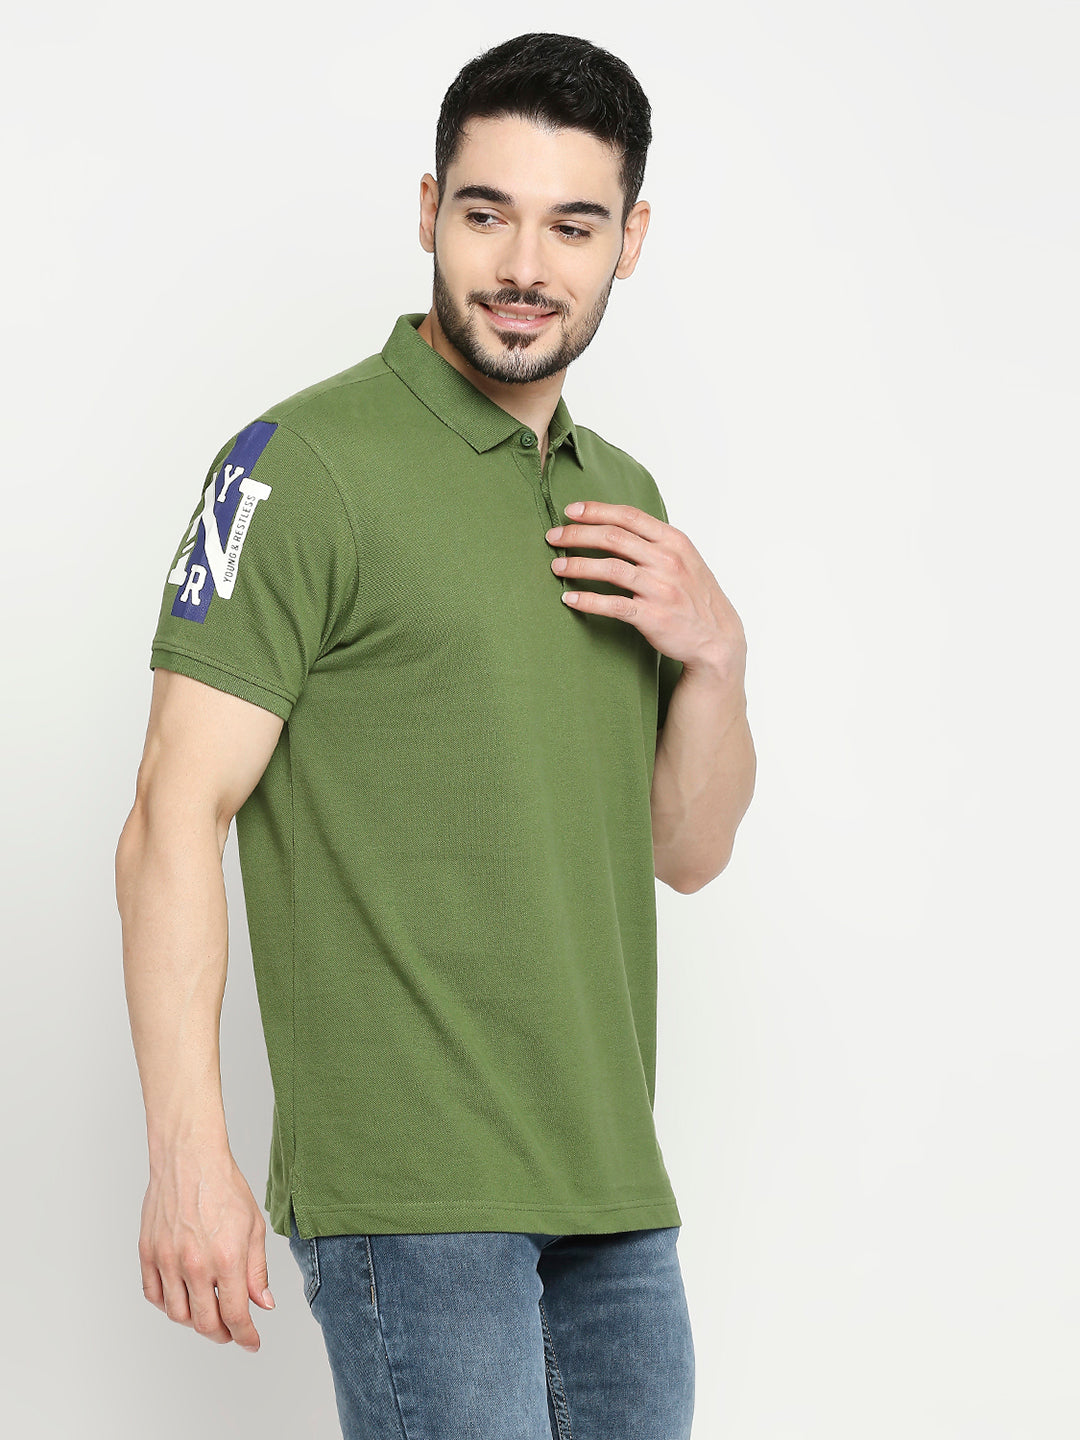 Spykar Cactus Green Cotton Half Sleeve Plain Casual Polo T-Shirts For Men